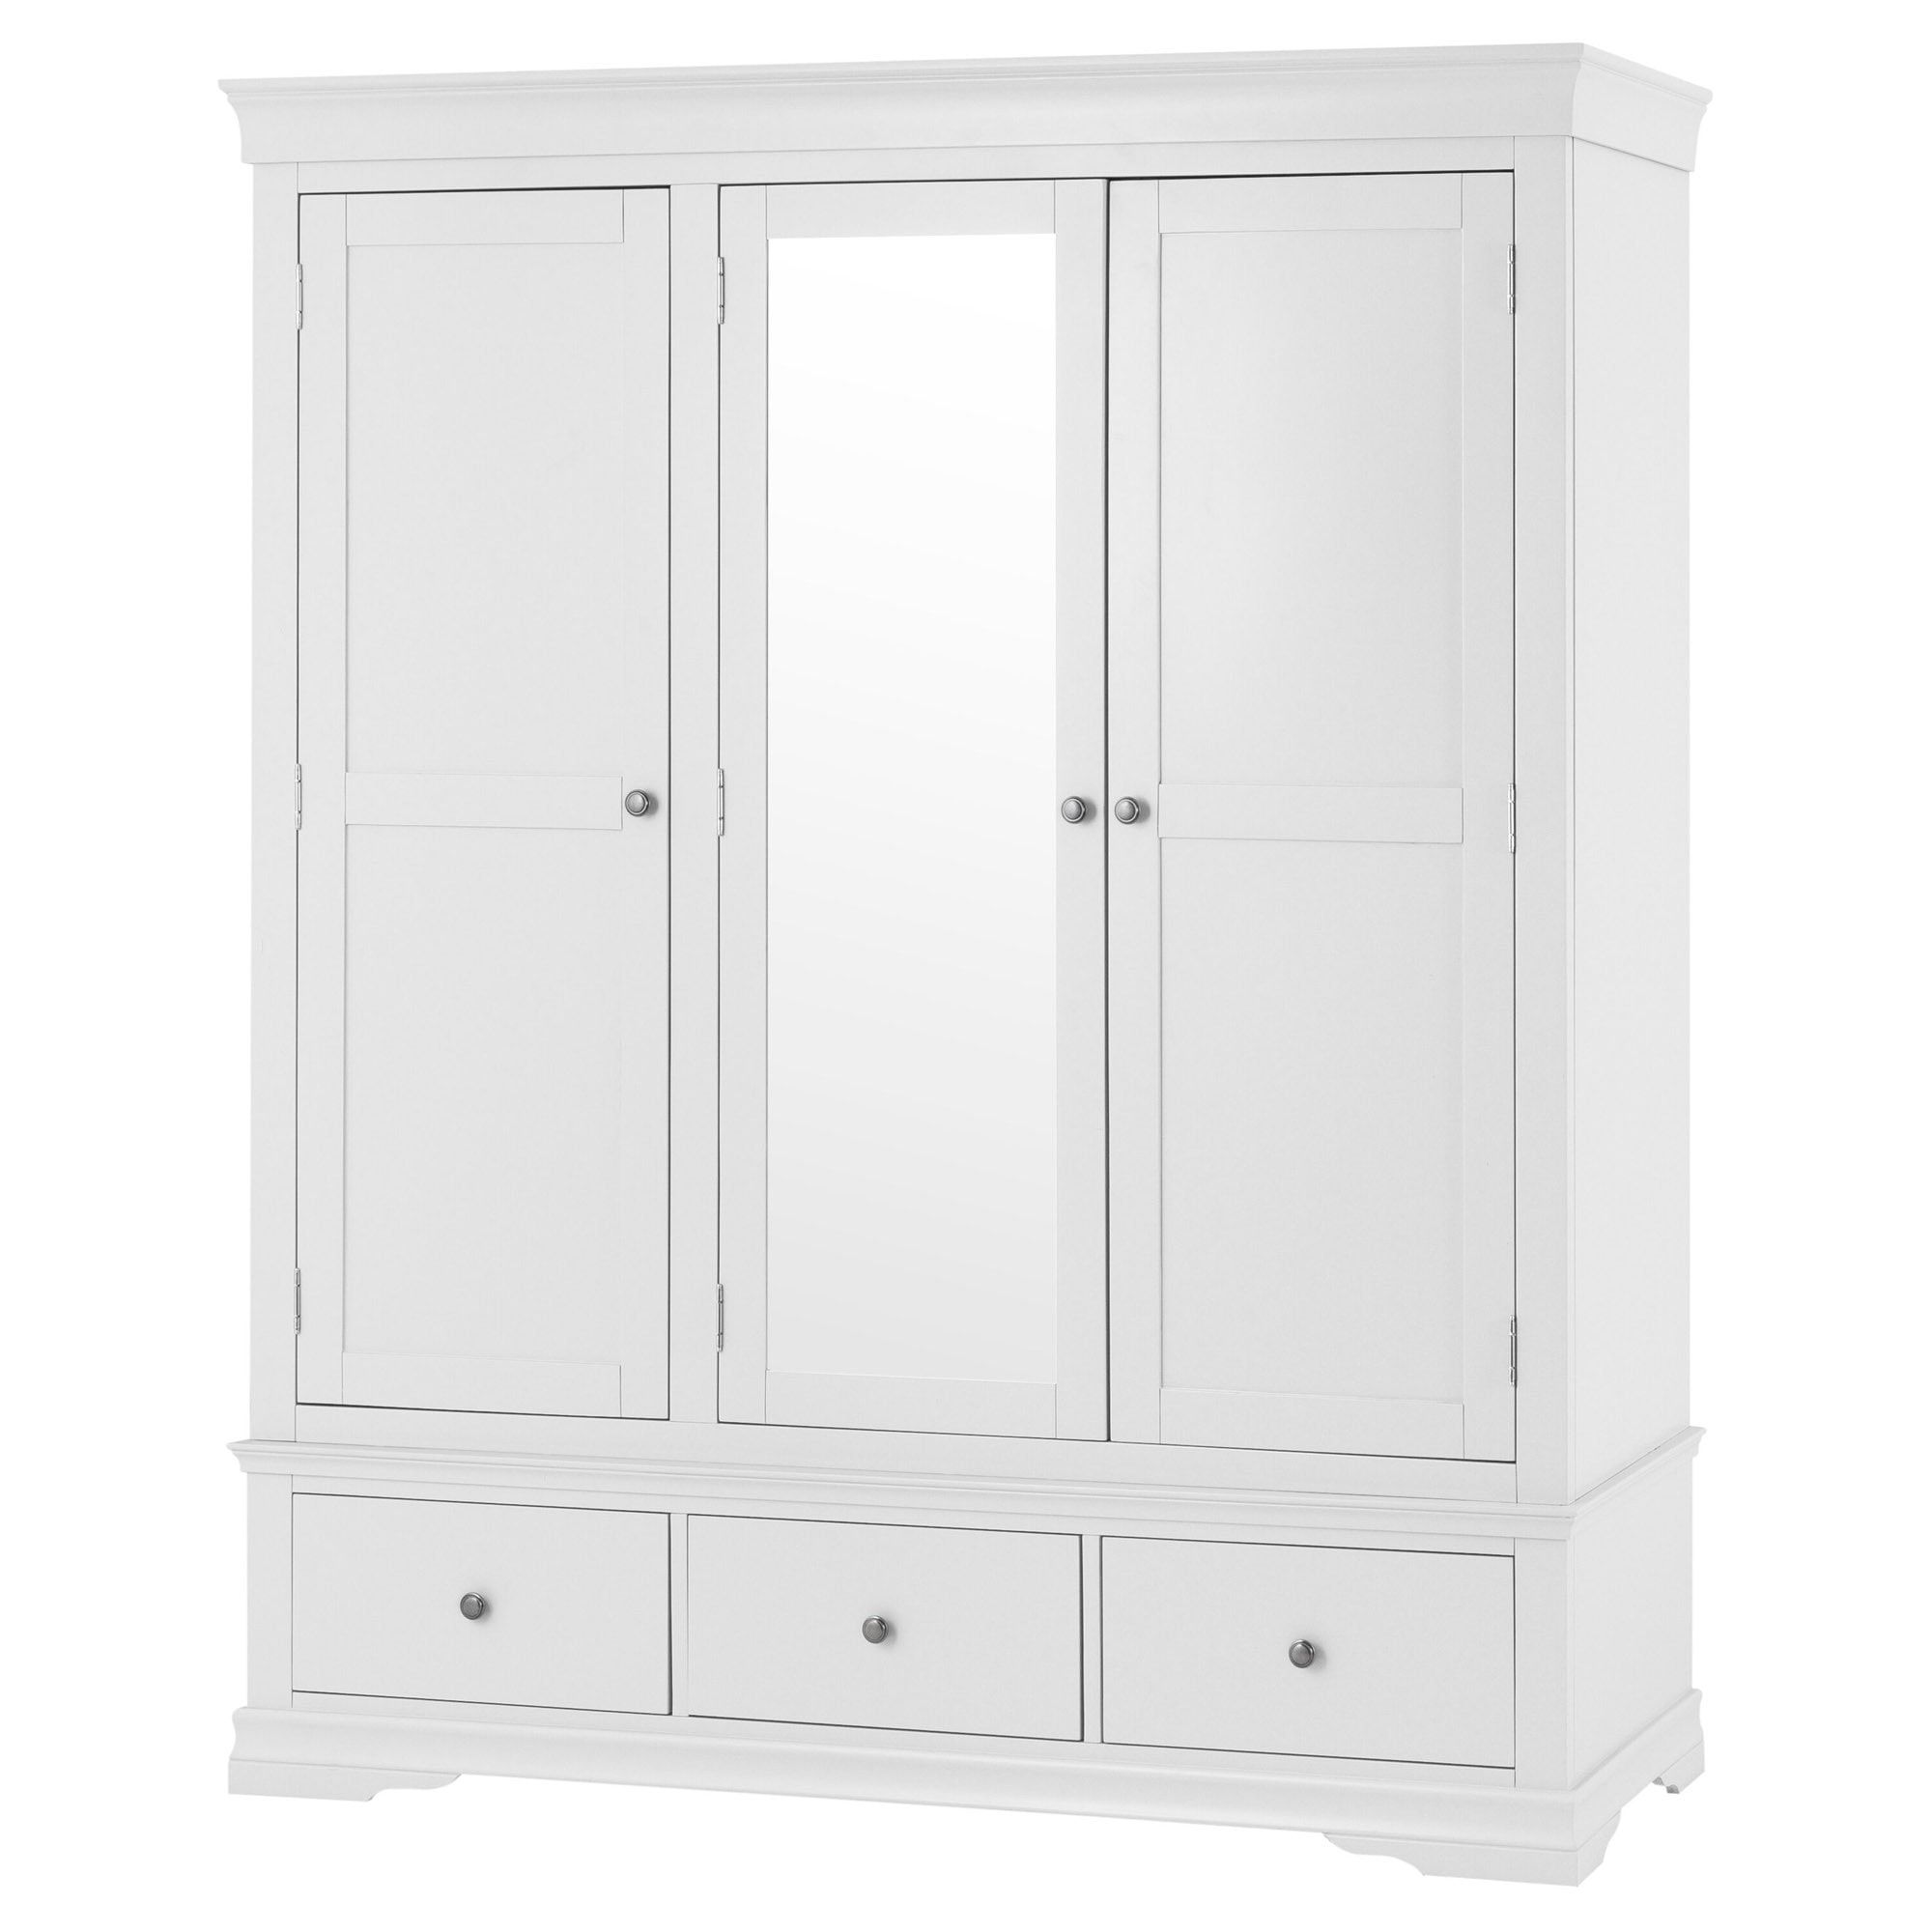 Swindon White 3 Door 3 Drawer Wardrobe | White Wardrobe | White Wooden  Wardrobe For White Wood Wardrobes (Gallery 3 of 20)